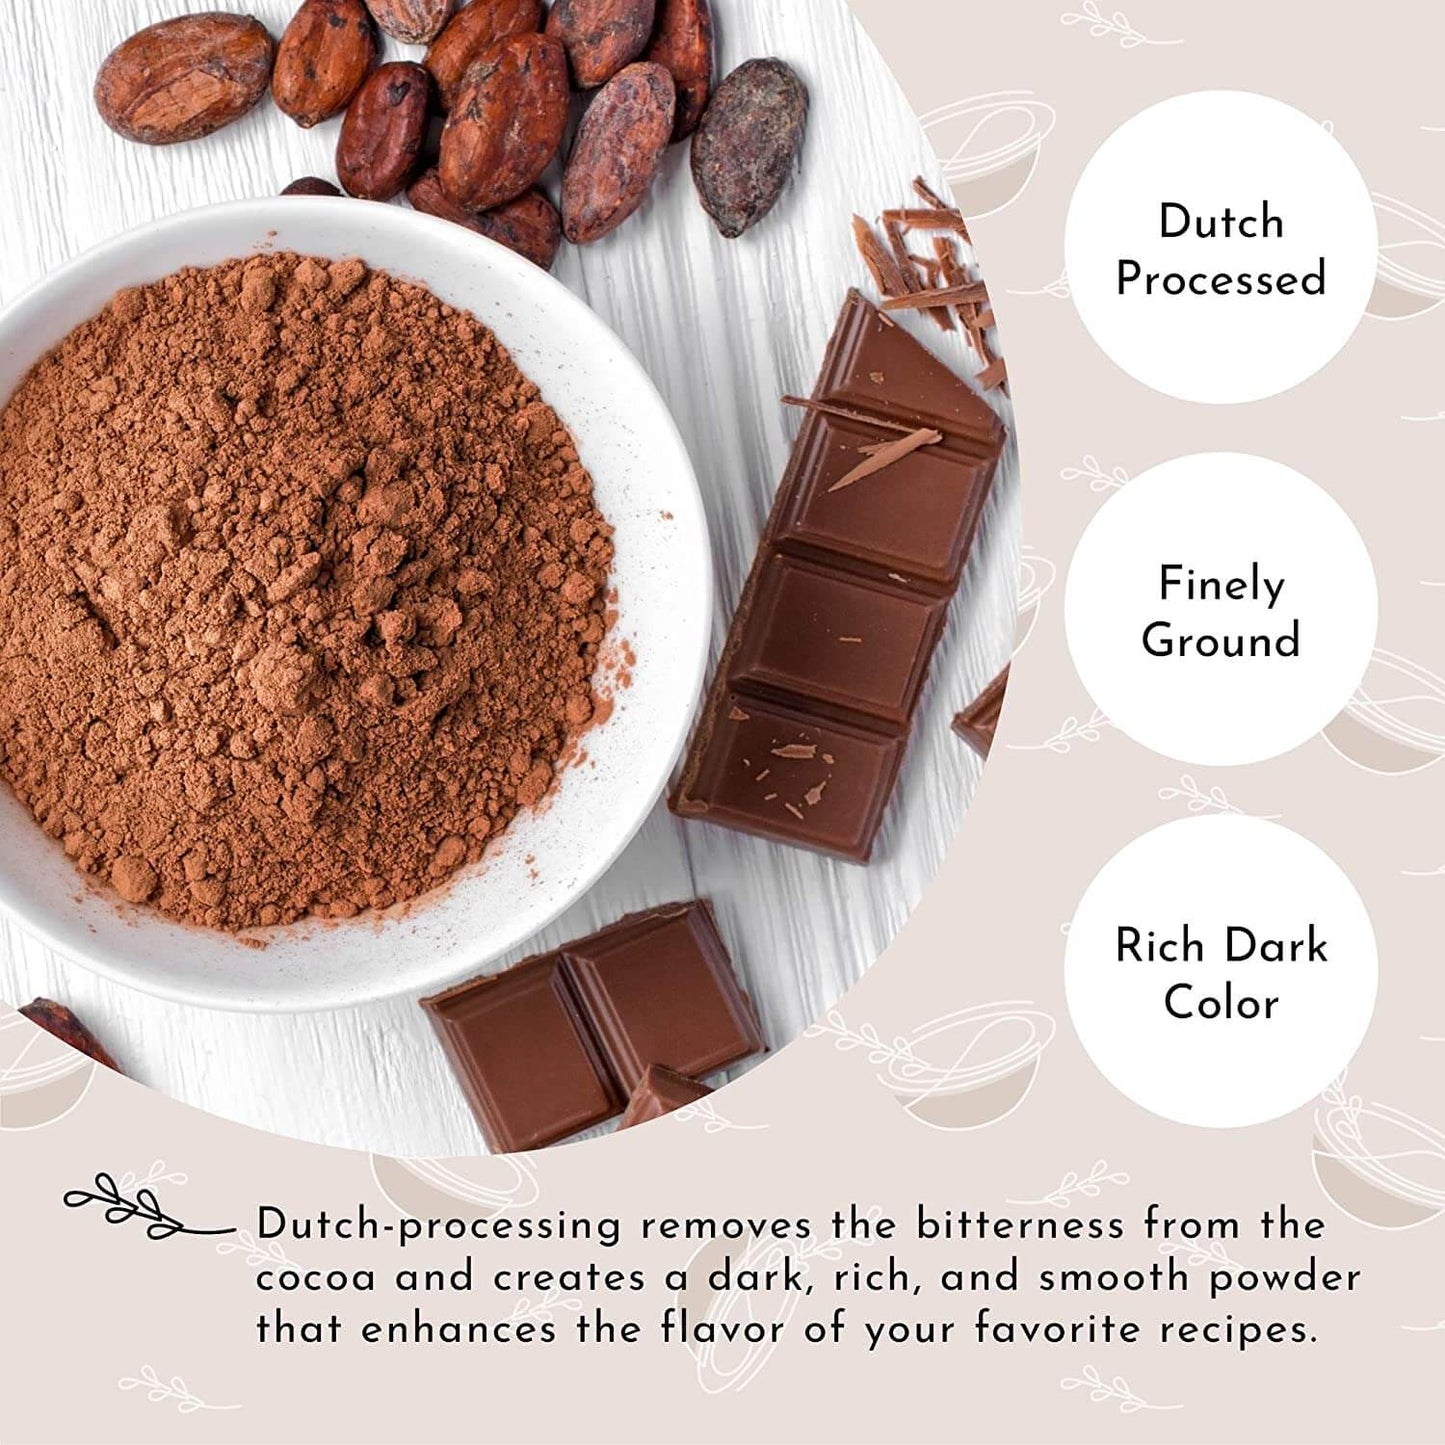 Scratch Premium Dutch Cocoa Powder - 8 oz - Additional Uses